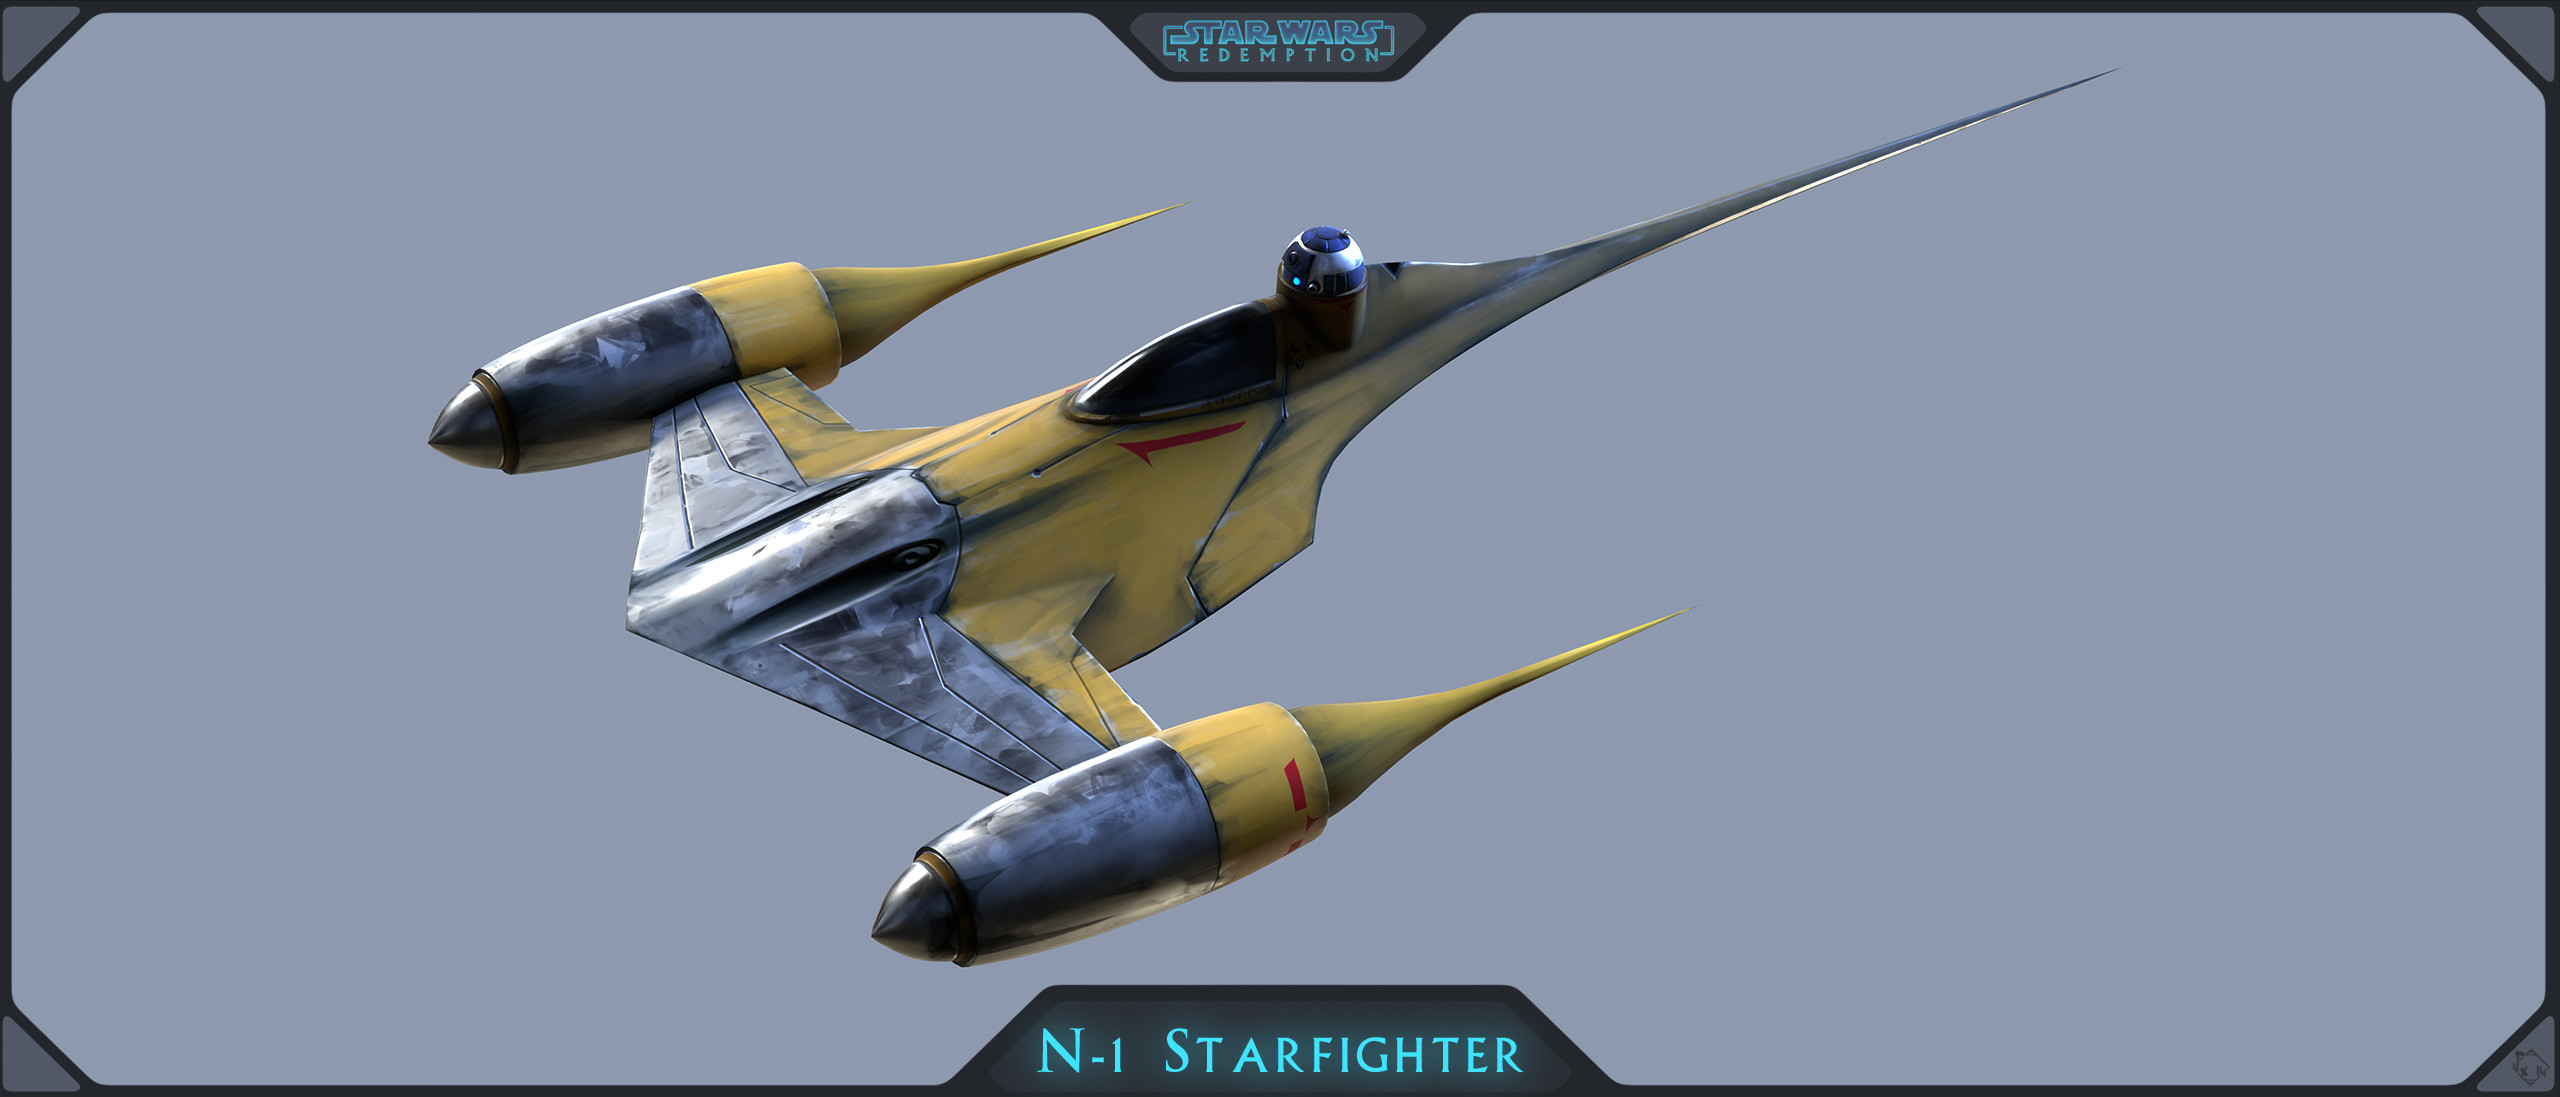 etienne-beschet-rd-prp-starfighter-n-1-0